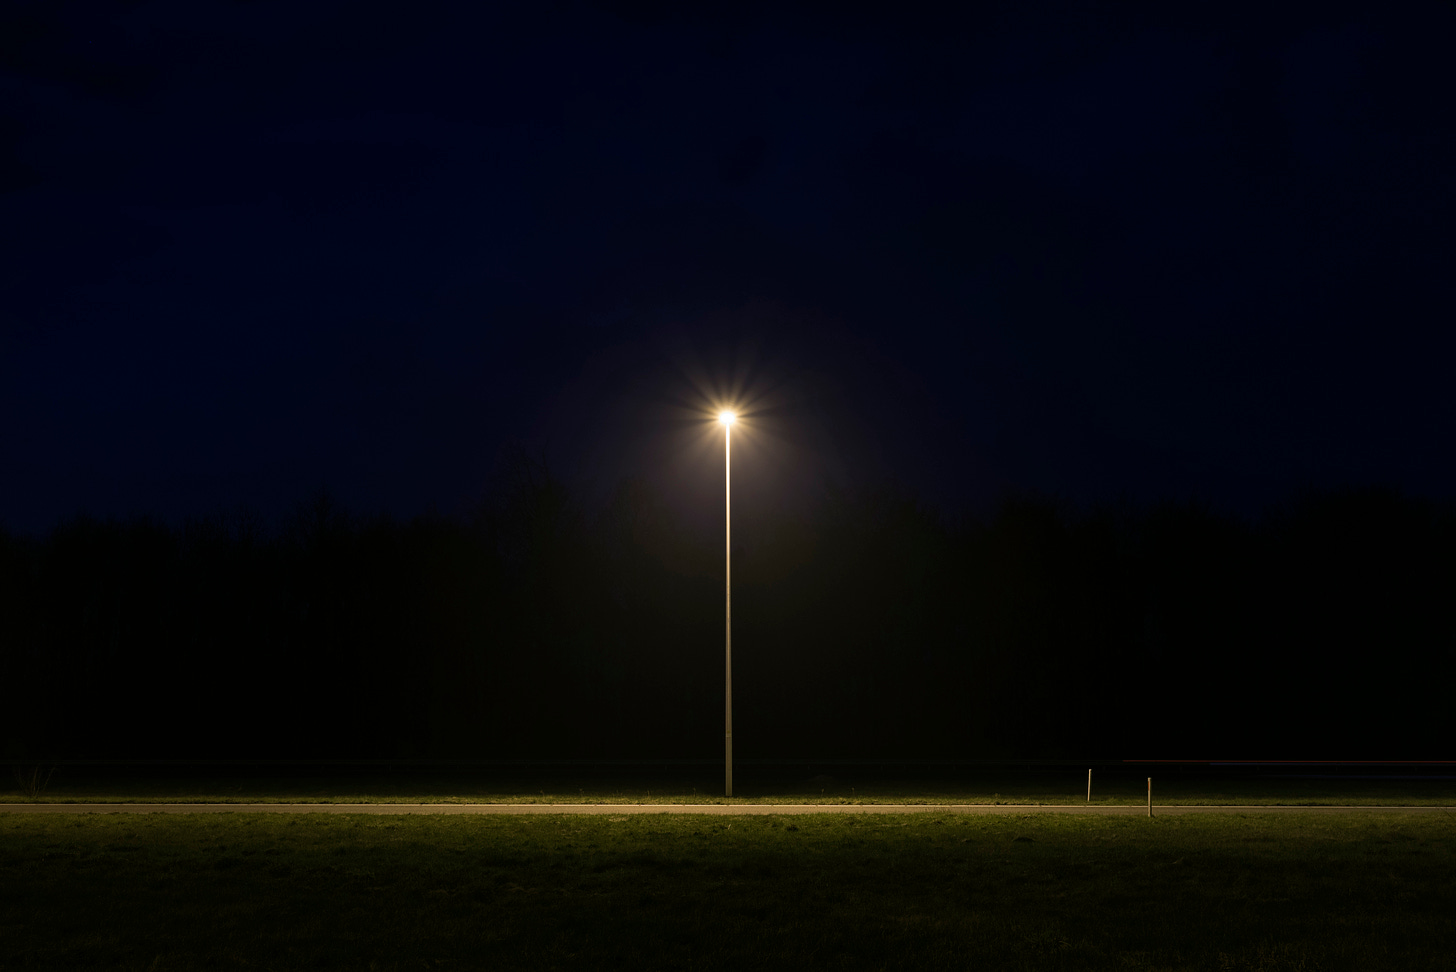 Single light illuminating a field